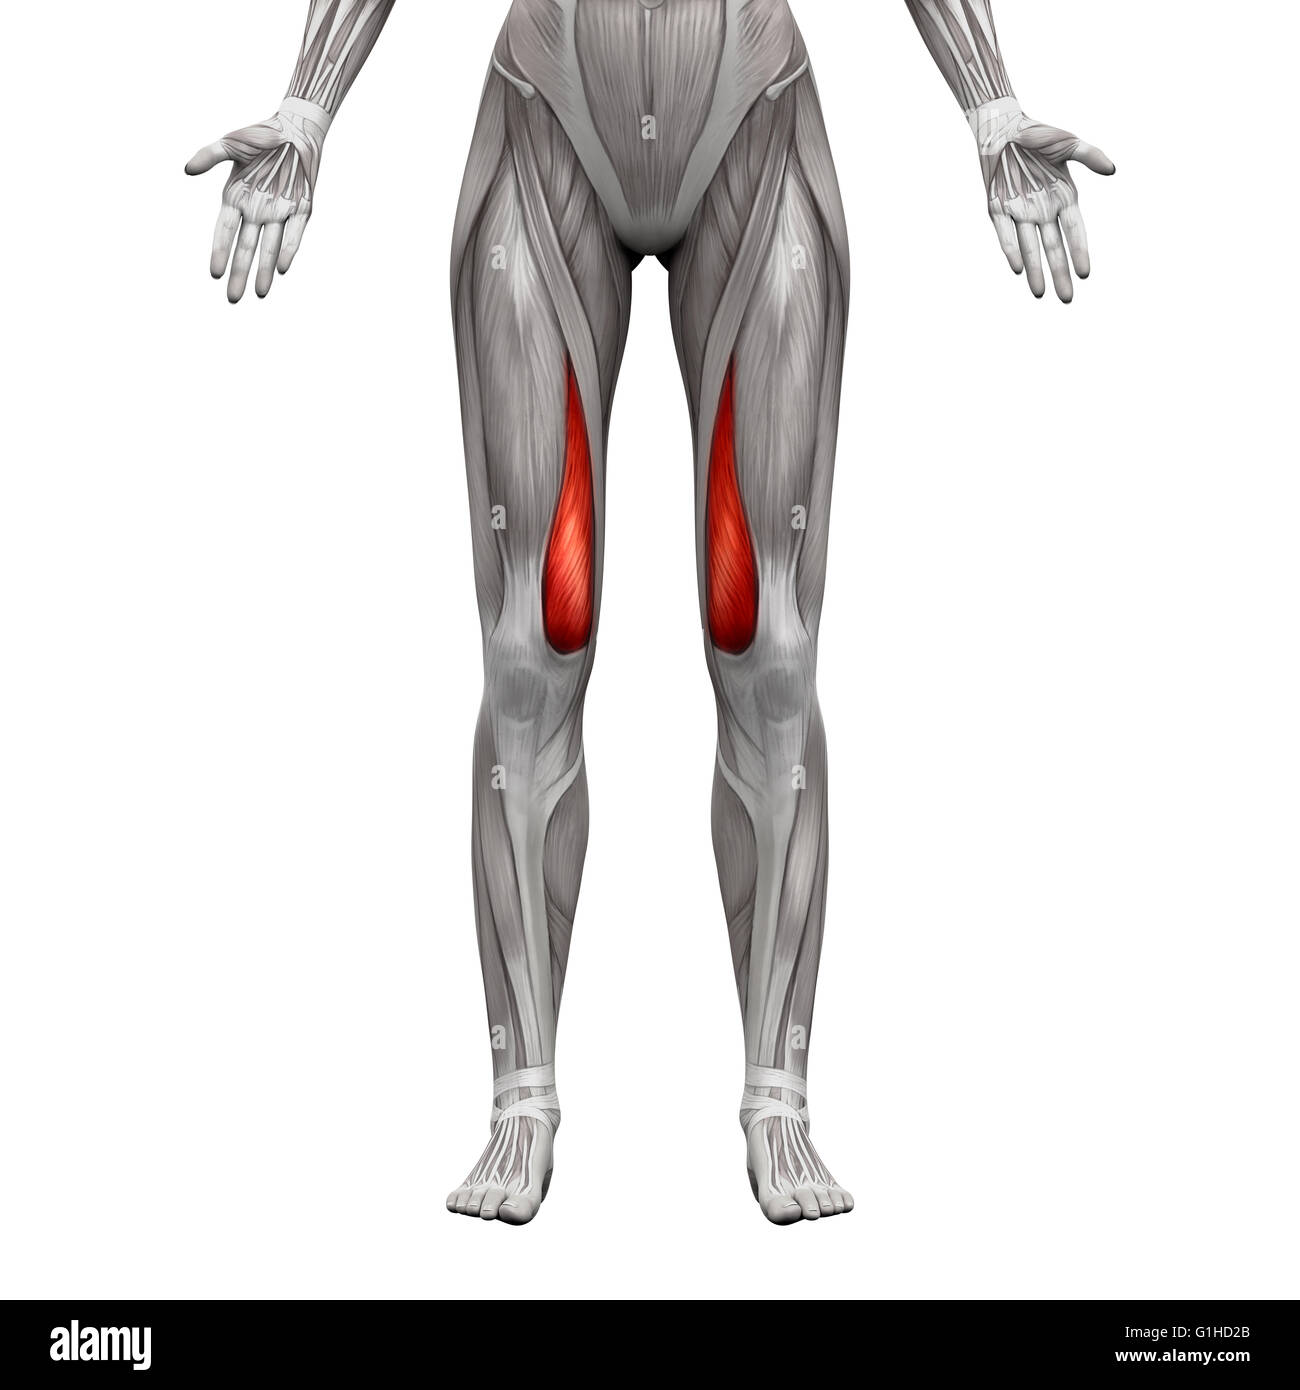 Vastus Medialis Muscle - Anatomy Muscles isolated on white - 3D illustration Stock Photo